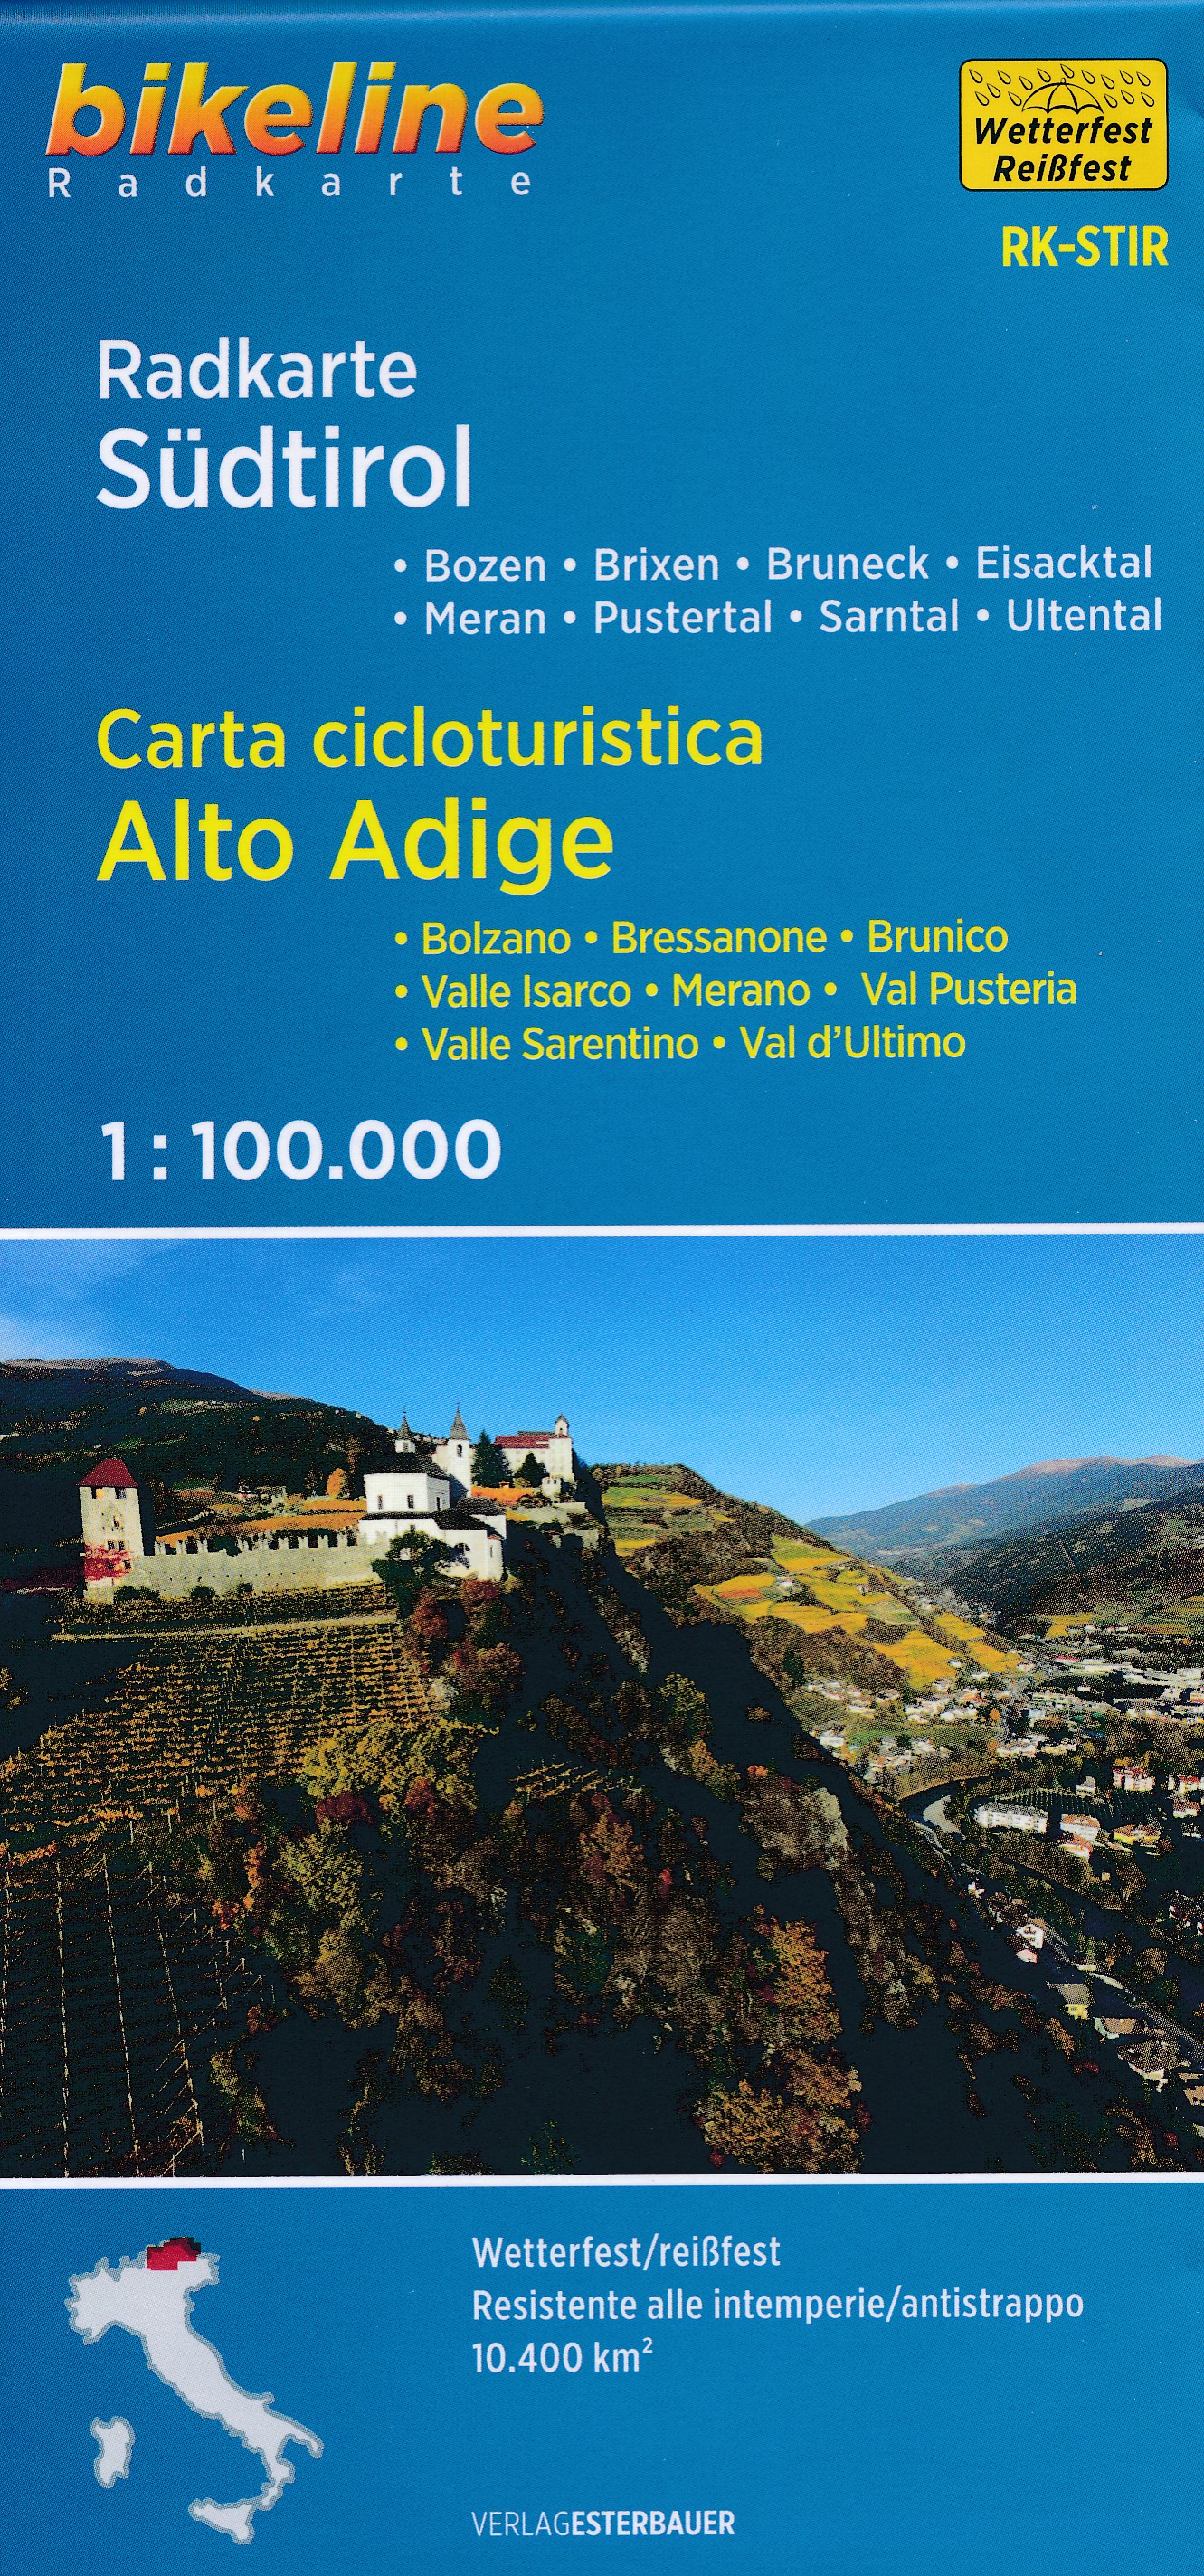 Online bestellen: Fietskaart RK-STIR Bikeline Radkarte Südtirol - Alto Adige - zuid Tirol | Esterbauer